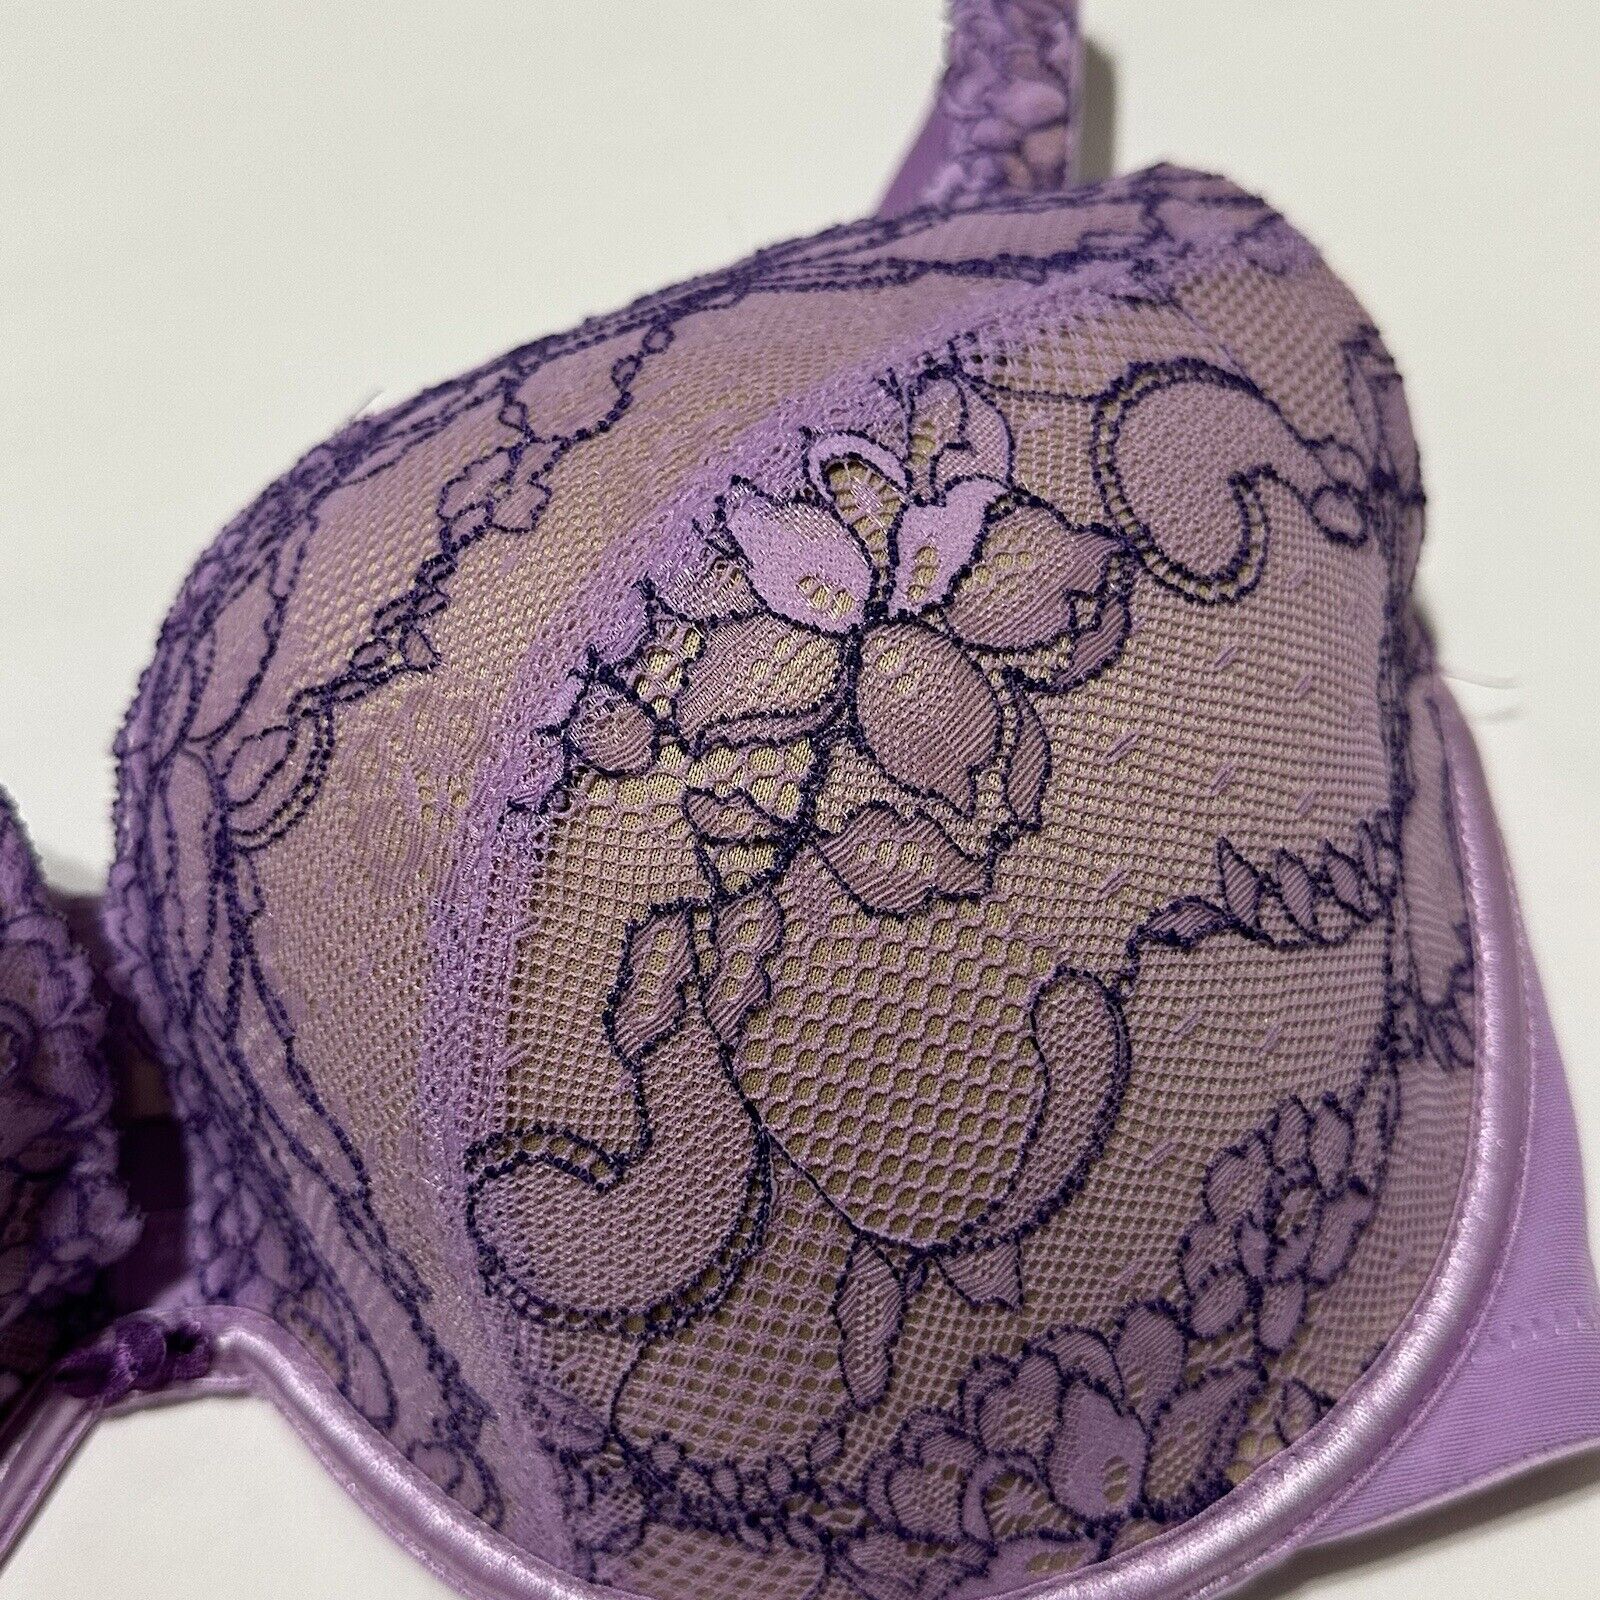 Cacique 44DD Purple / Nude Lace Padded Bra - image 5